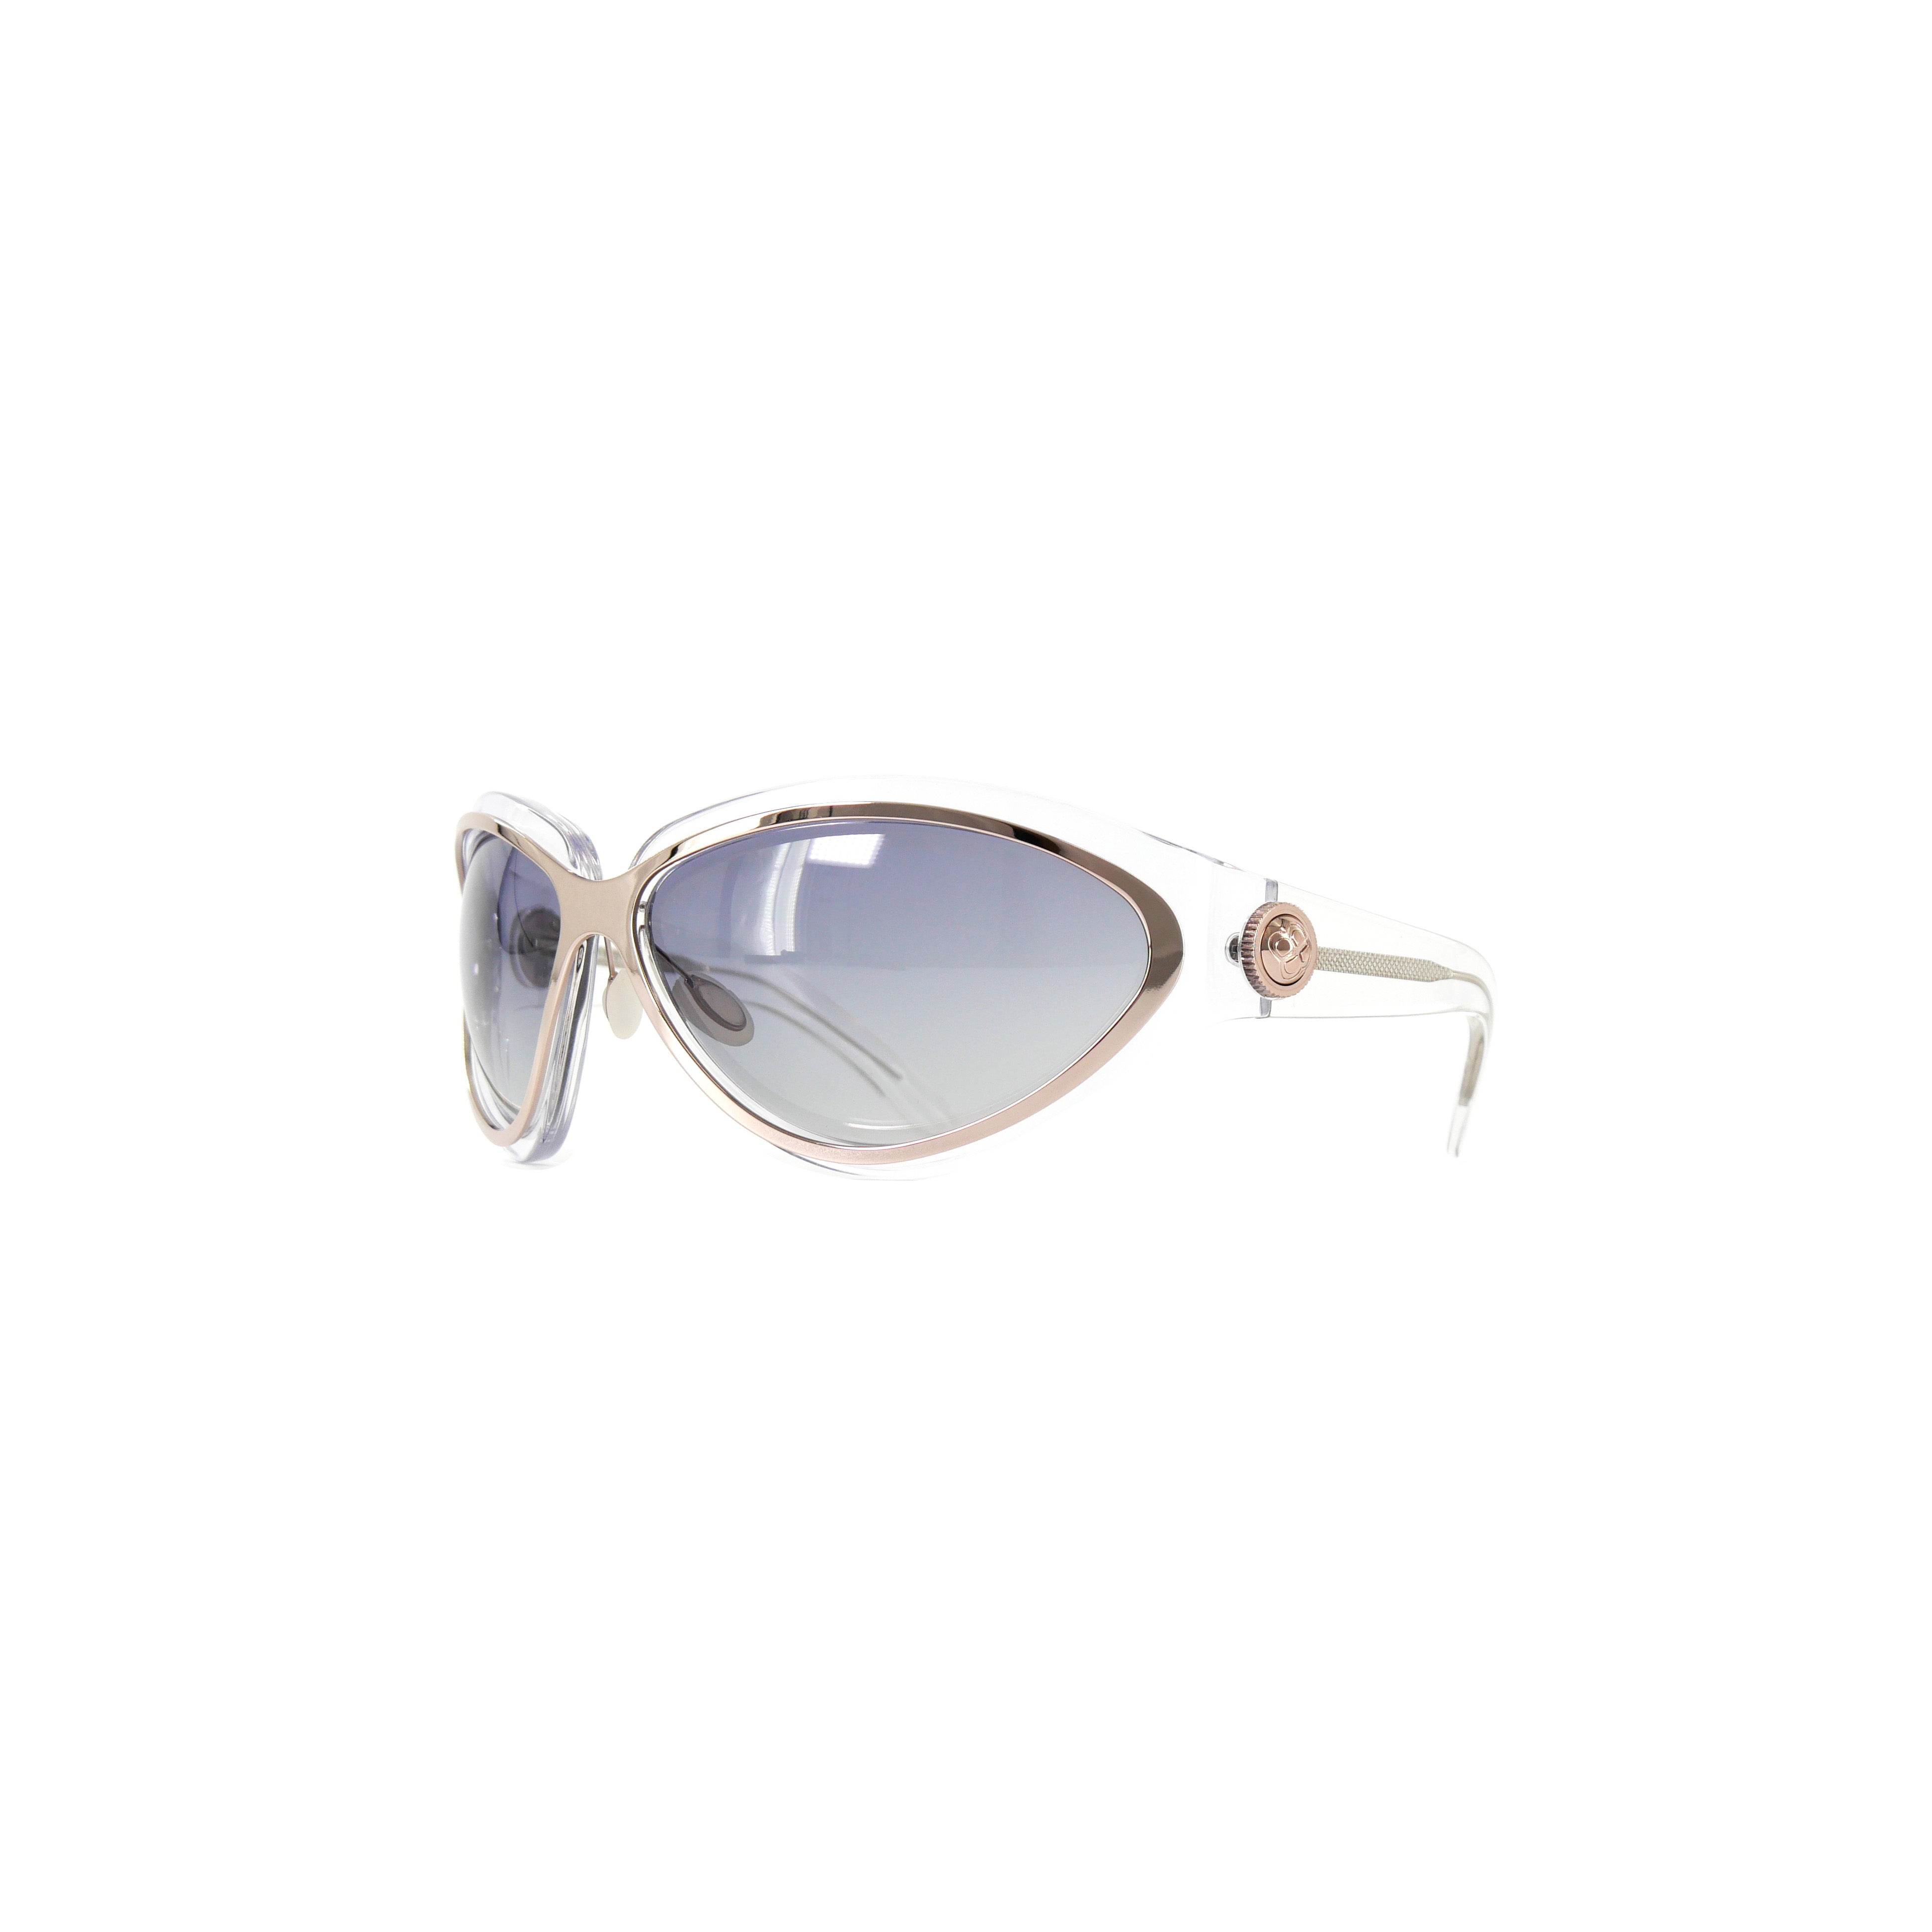 Retro Sun[レトロ サン] / BALENCIAGA Sunglasses (grey) [バレンシアガ サングラス]